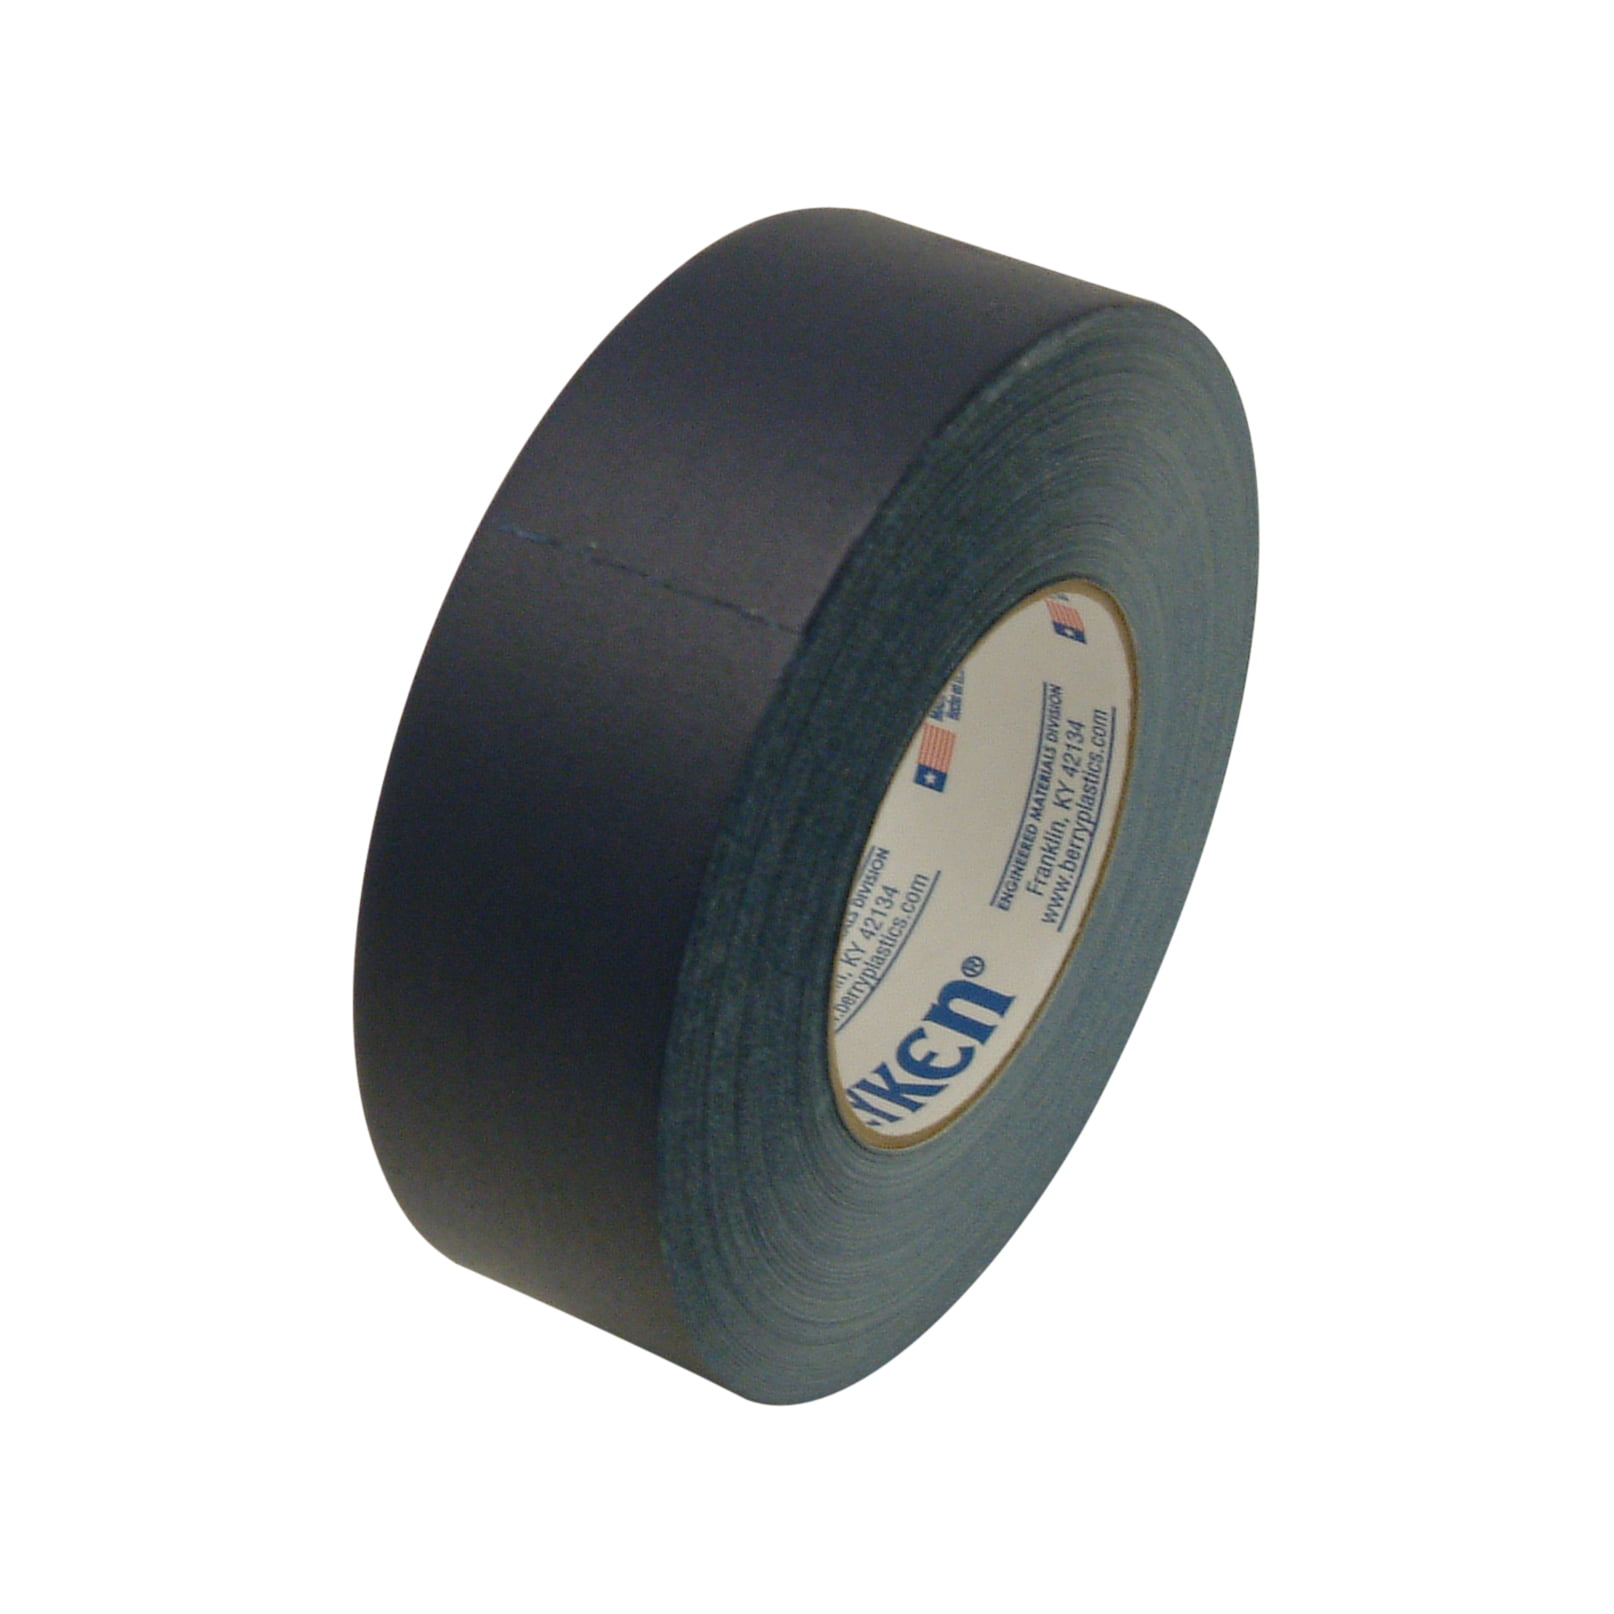 Polyken 510 Rubber Premium Grade Gaffers Tape 